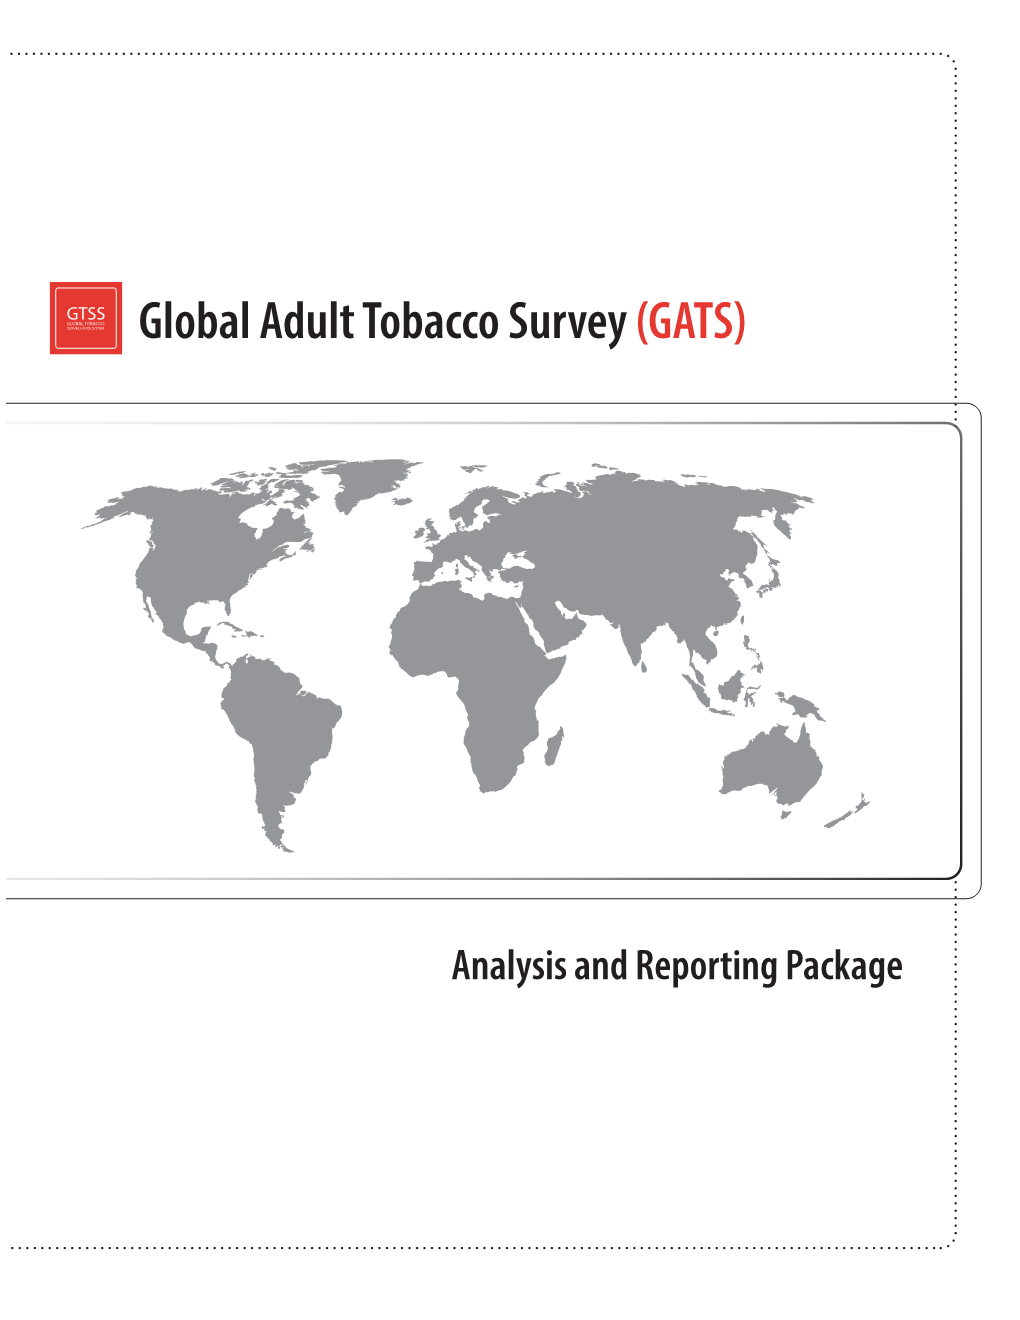 Global Adult Tobacco Survey (GATS): Fact Sheet Templates